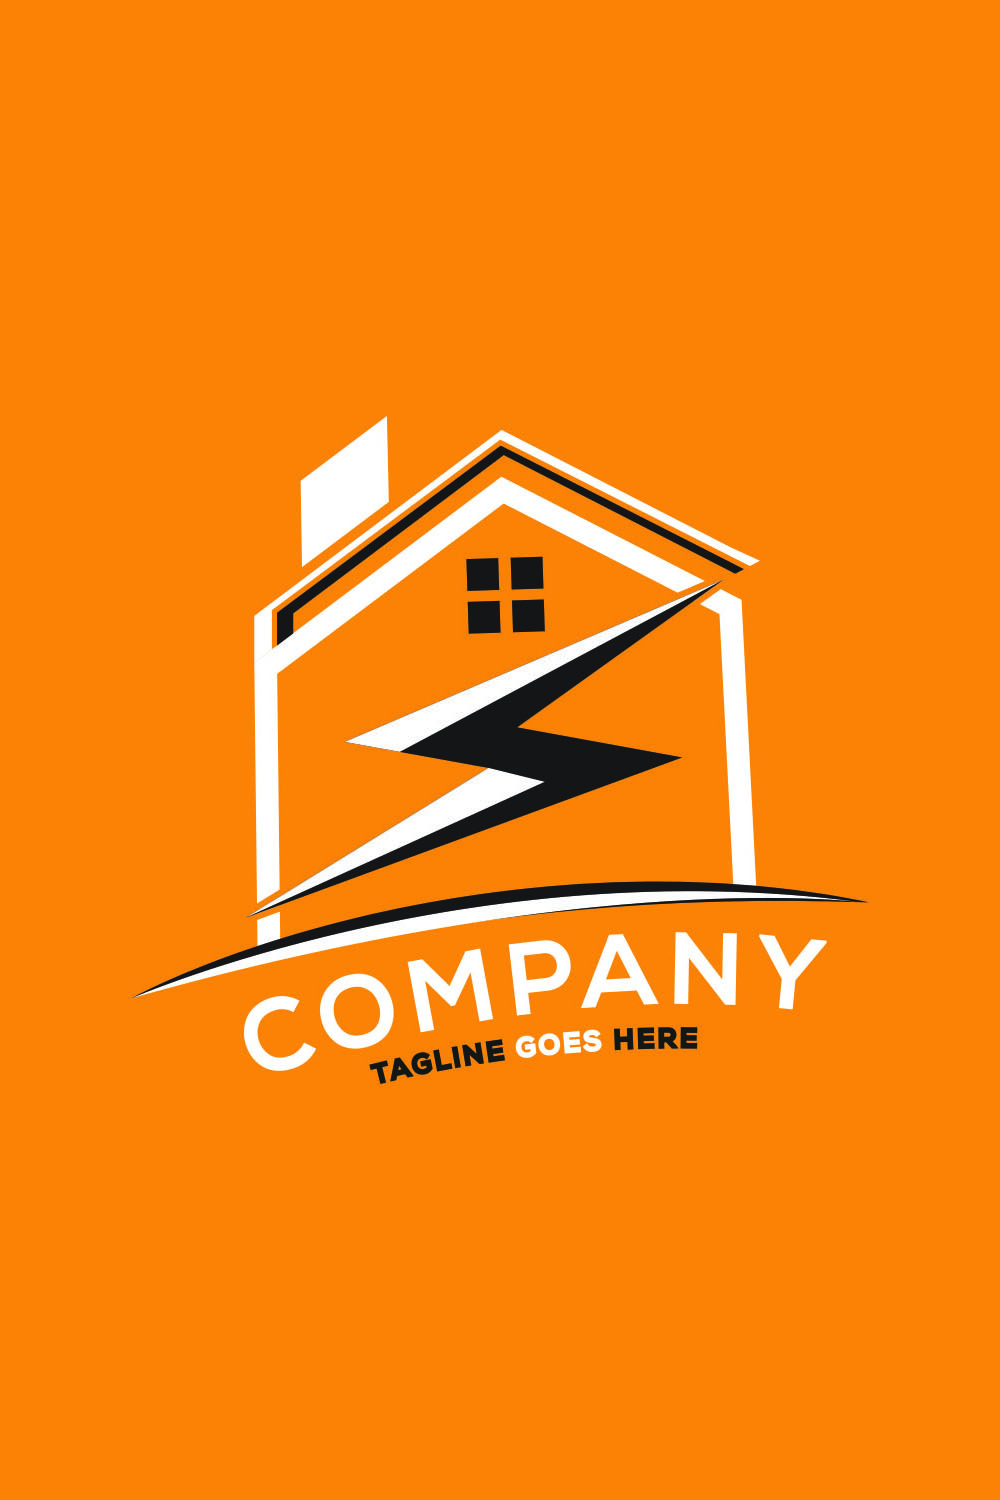 Electrical House Logo Pinterest image.